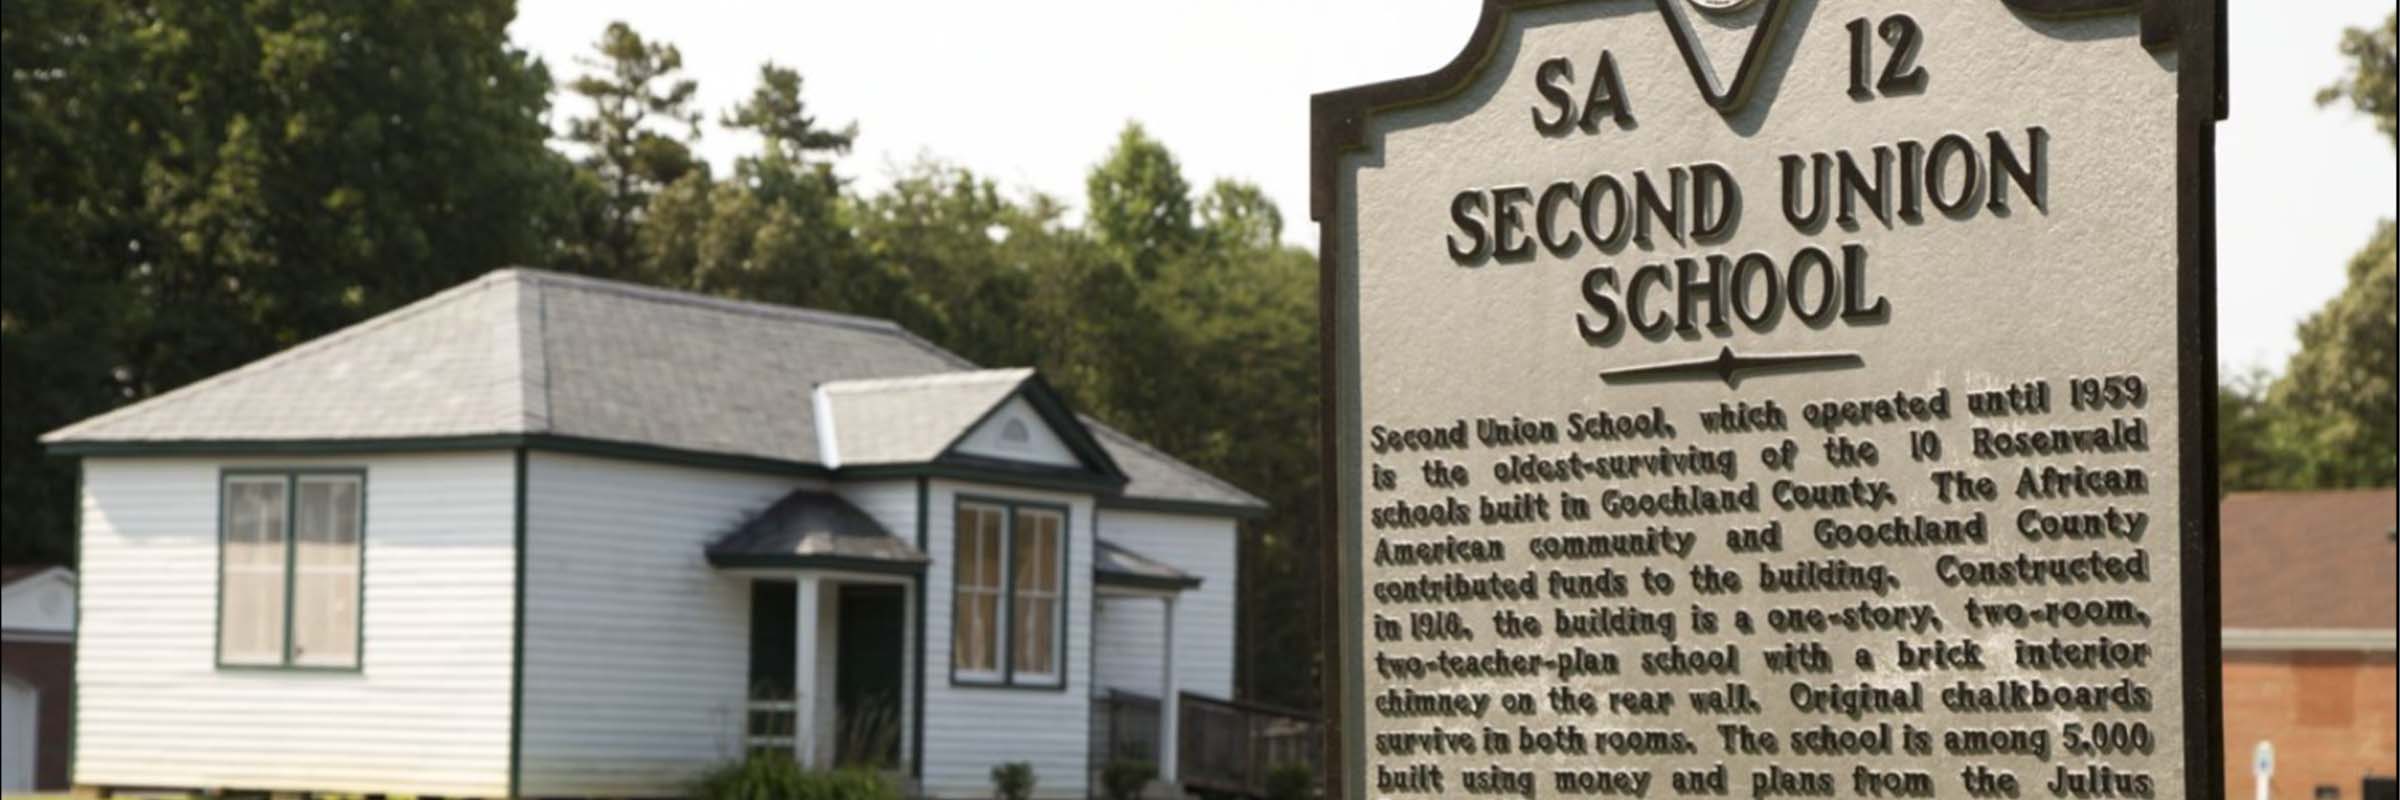 Second Union School and historical marker, Goochland County, Va., 2014